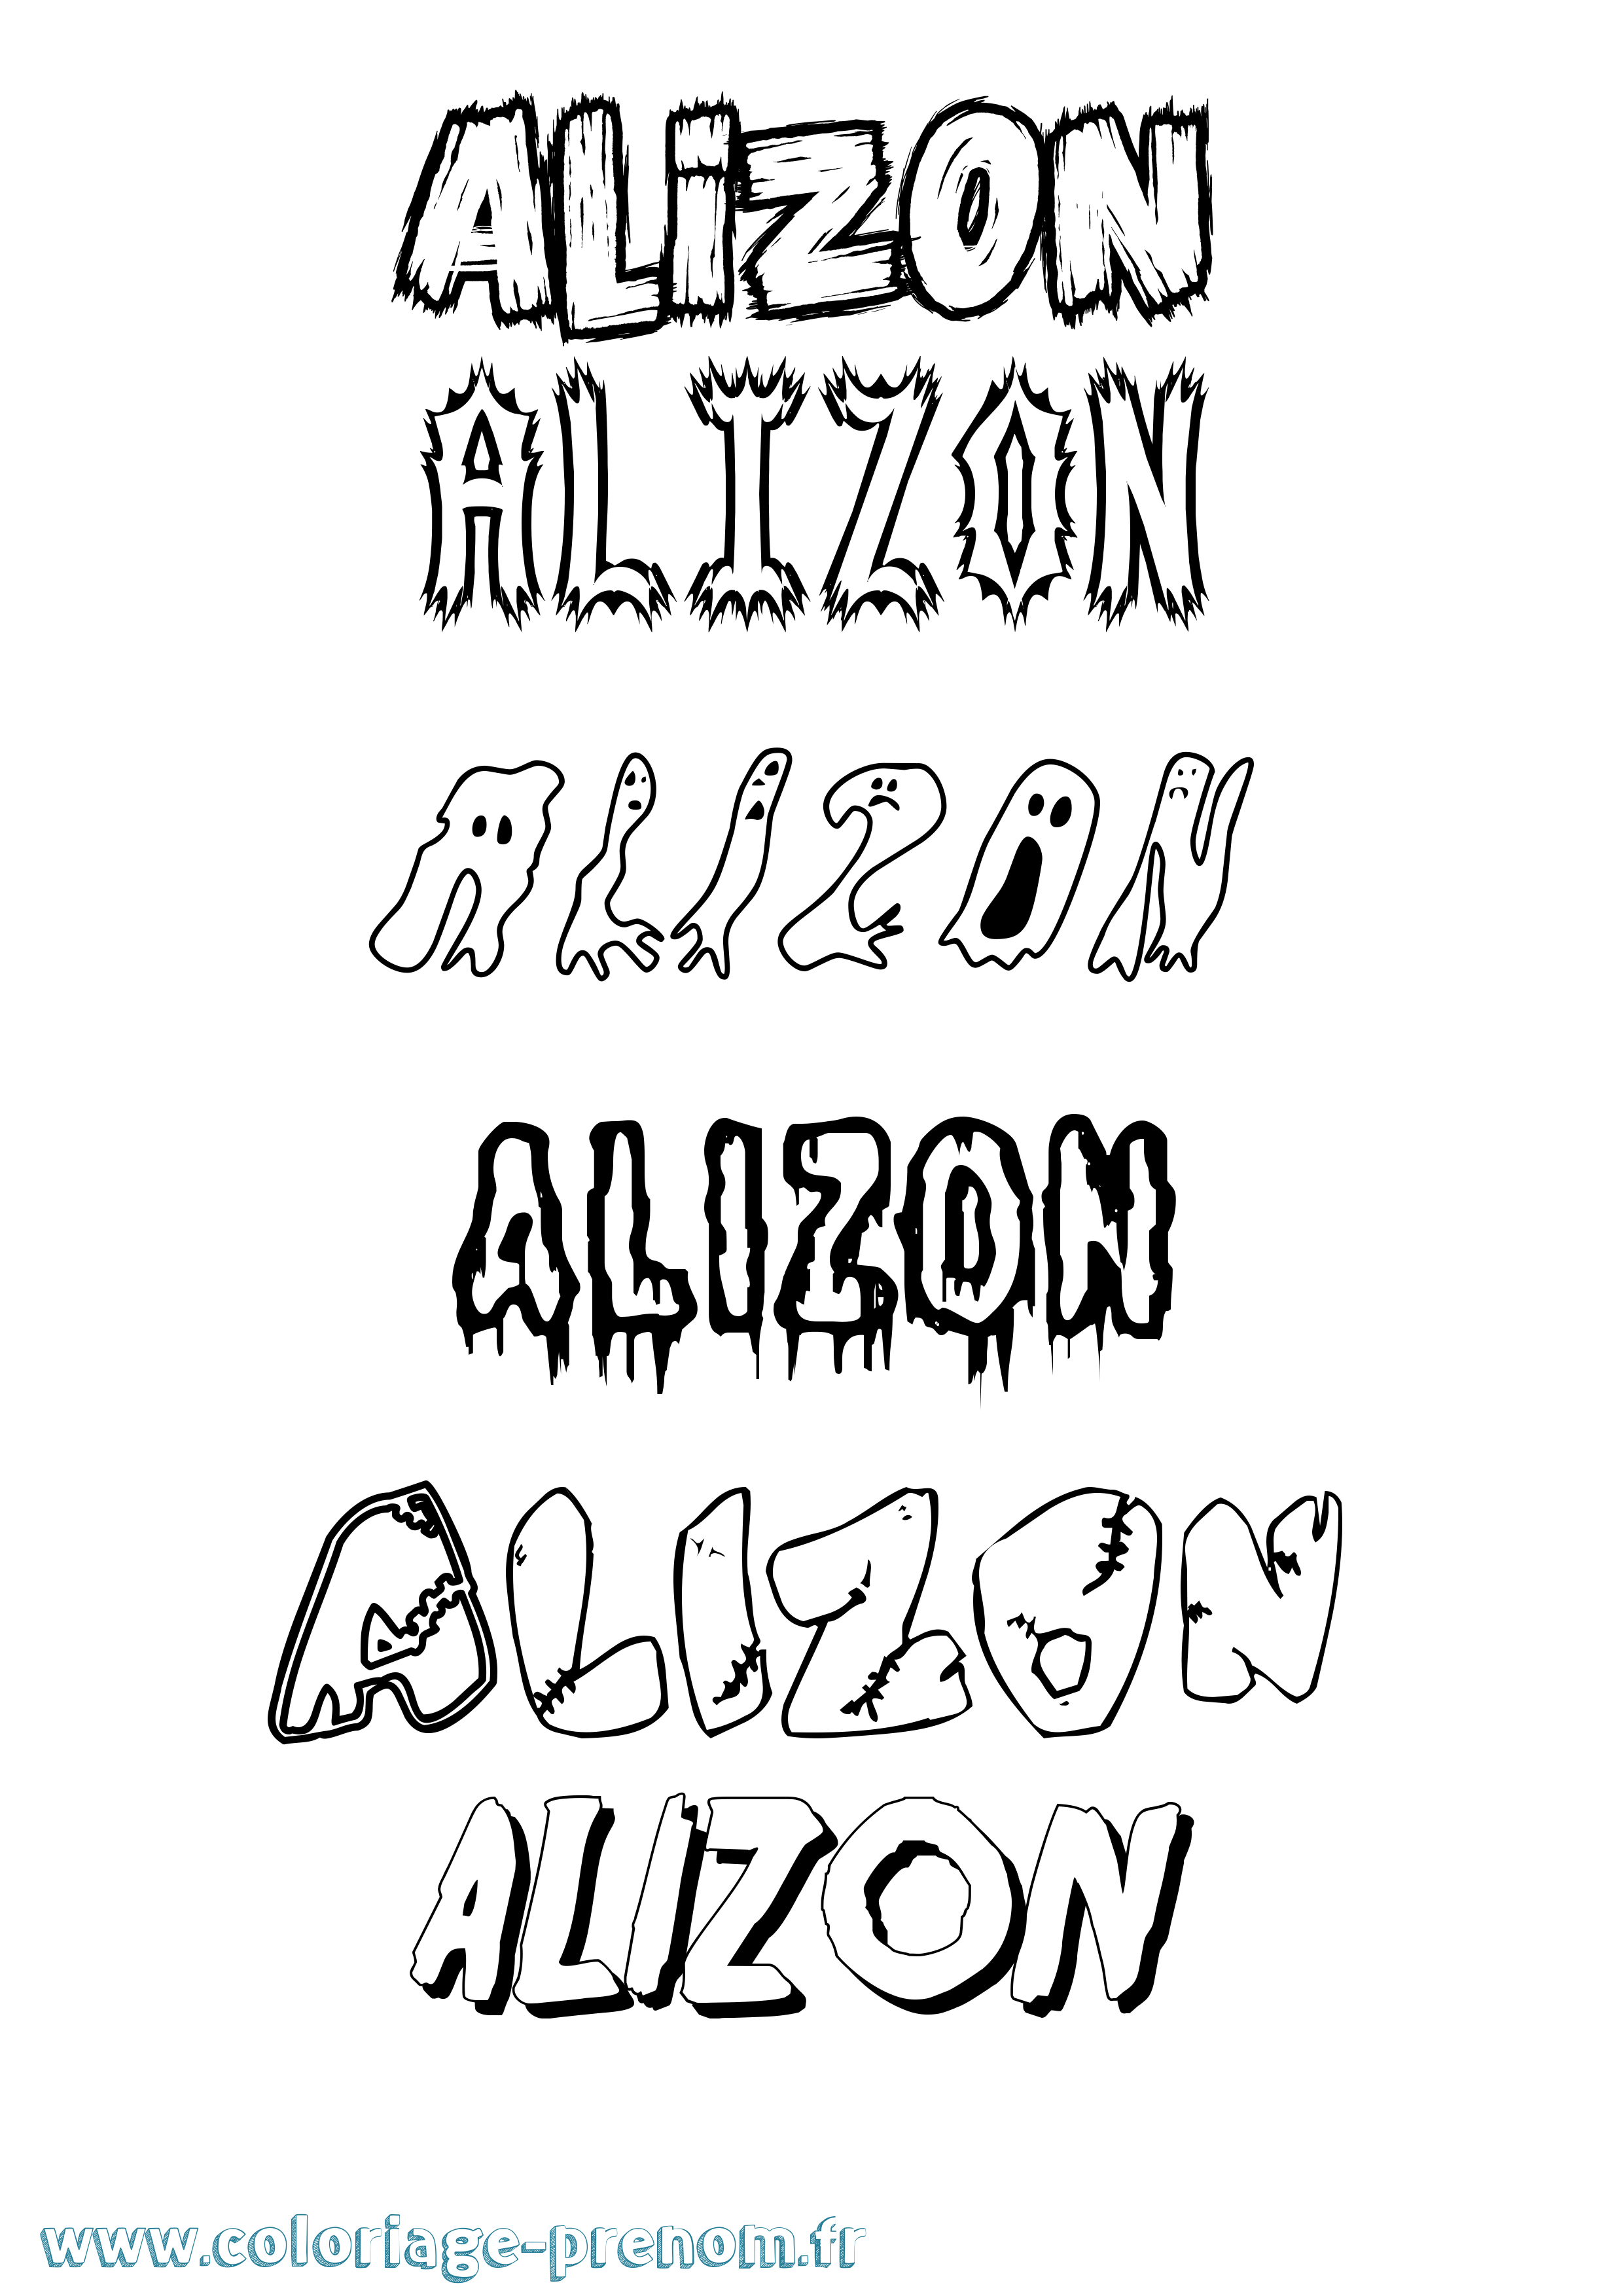 Coloriage prénom Alizon Frisson